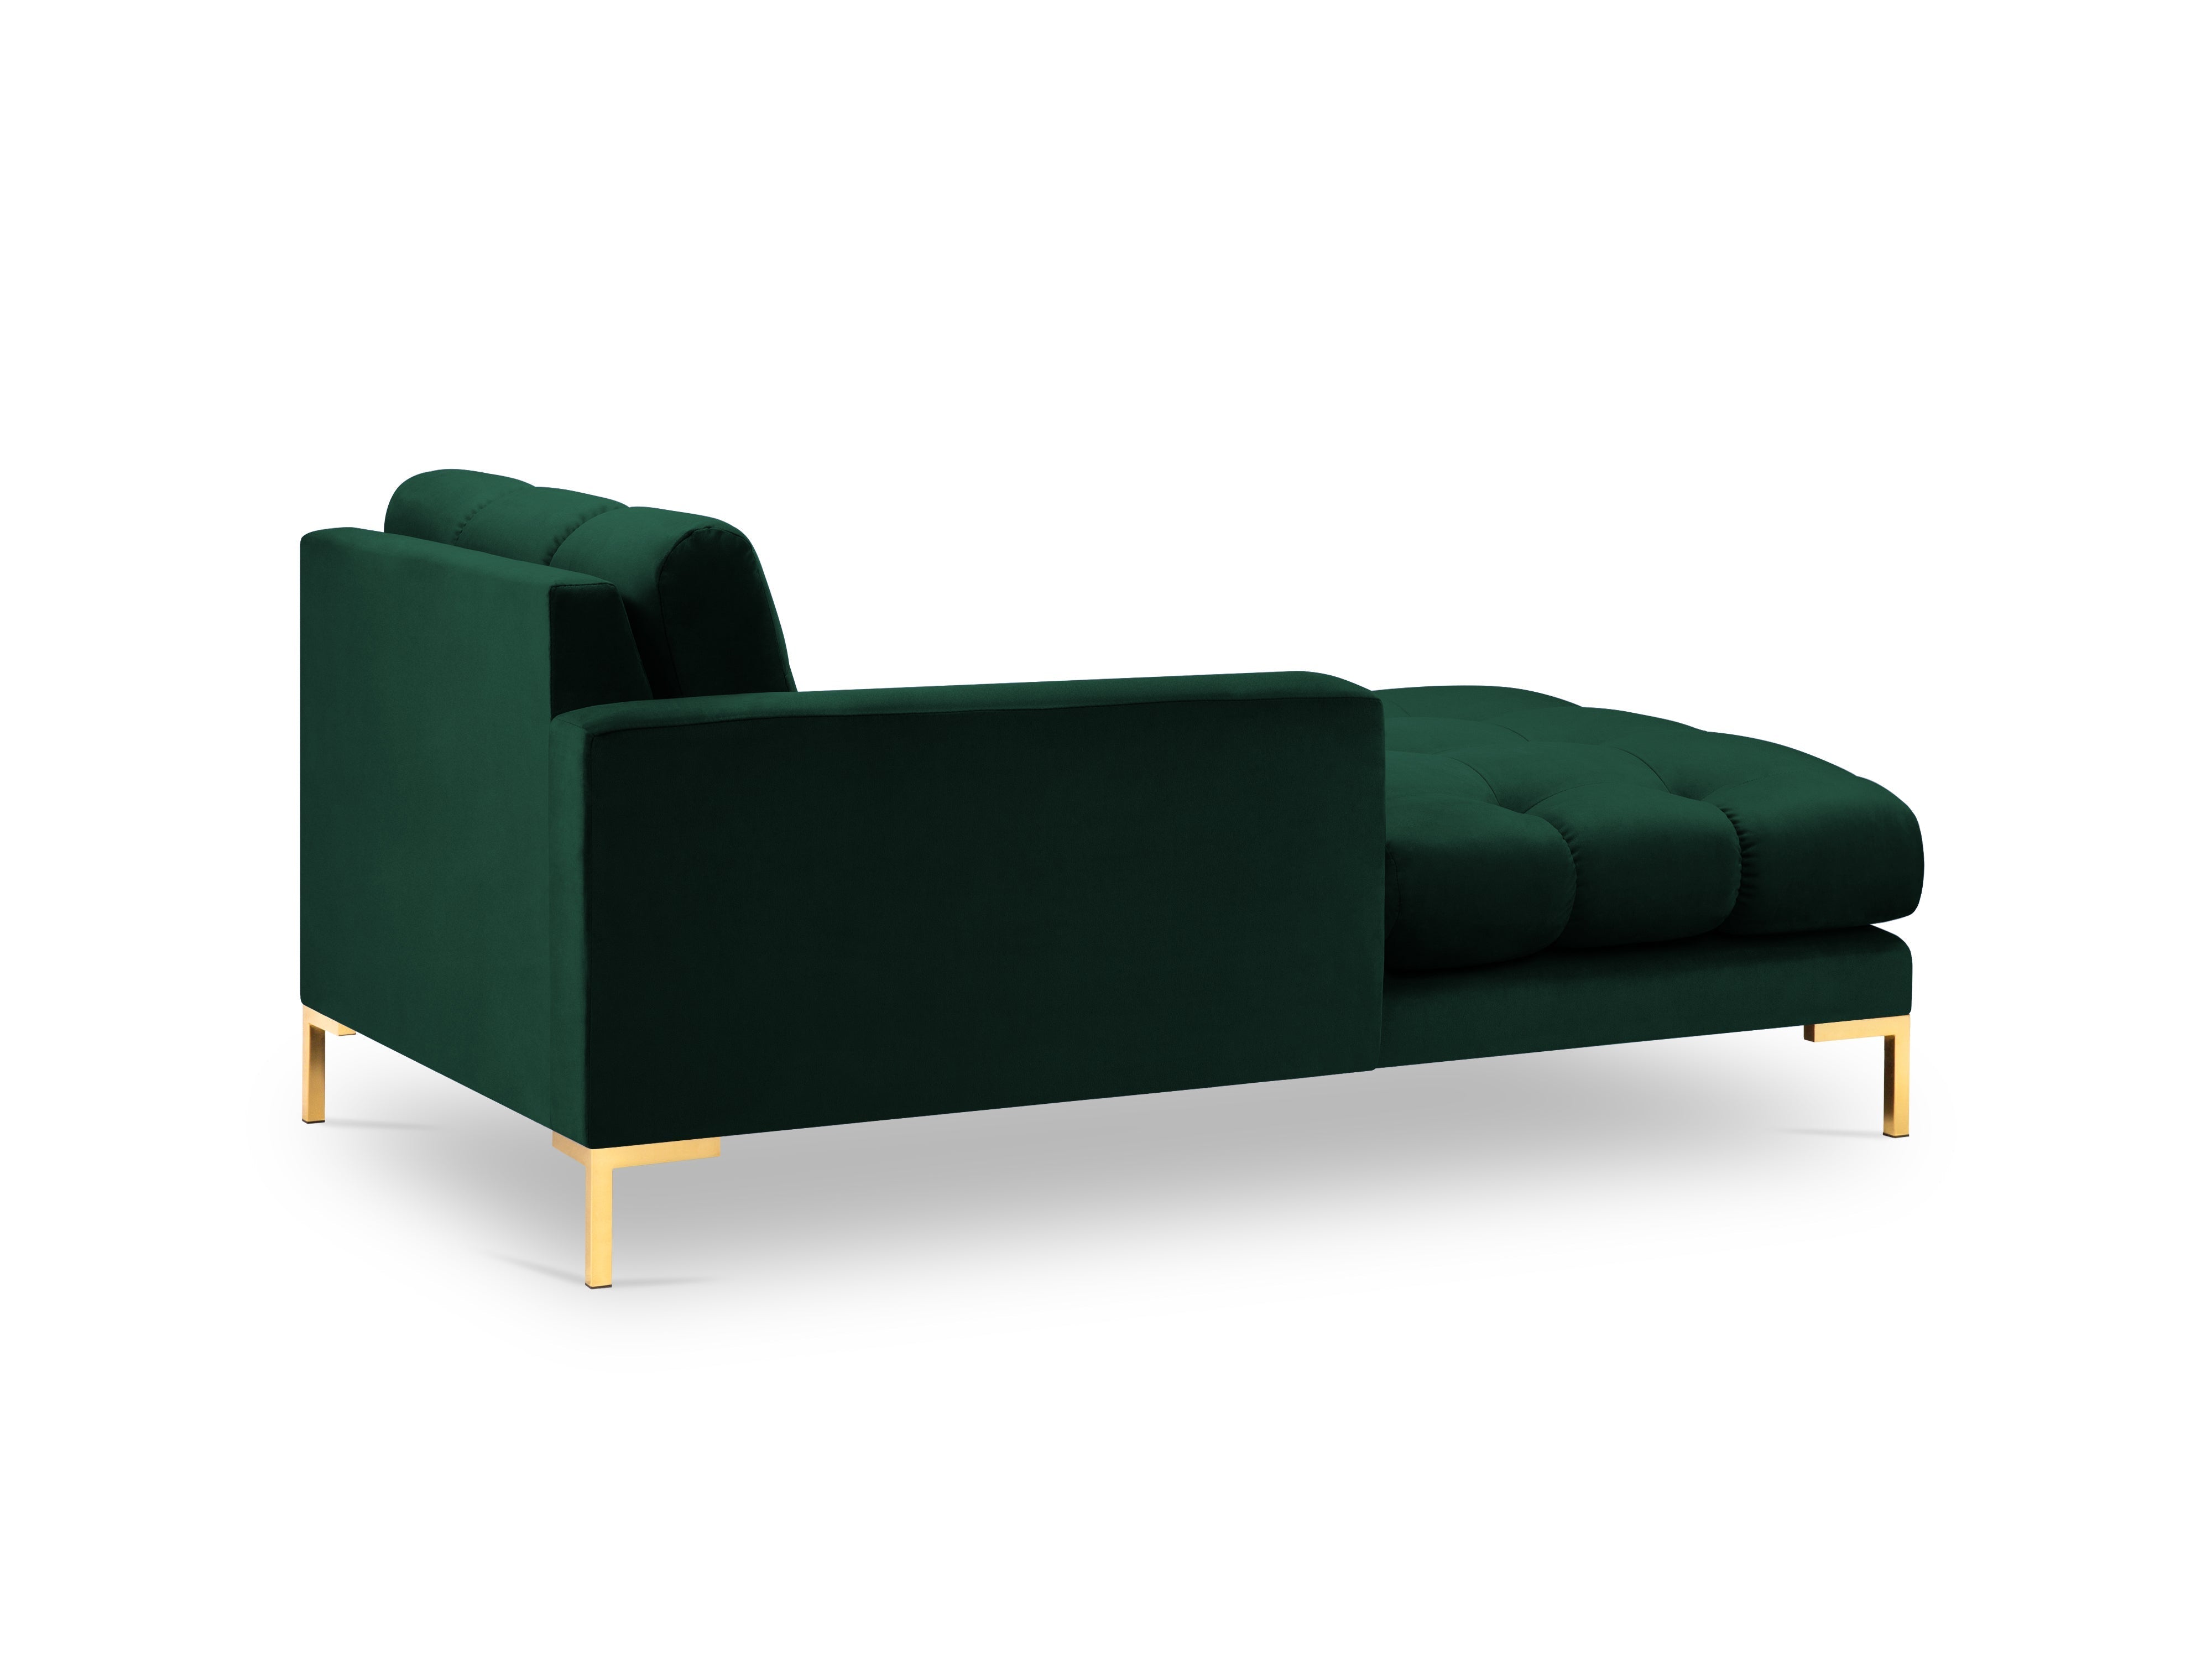 velvet green chaise -armchair with armrest